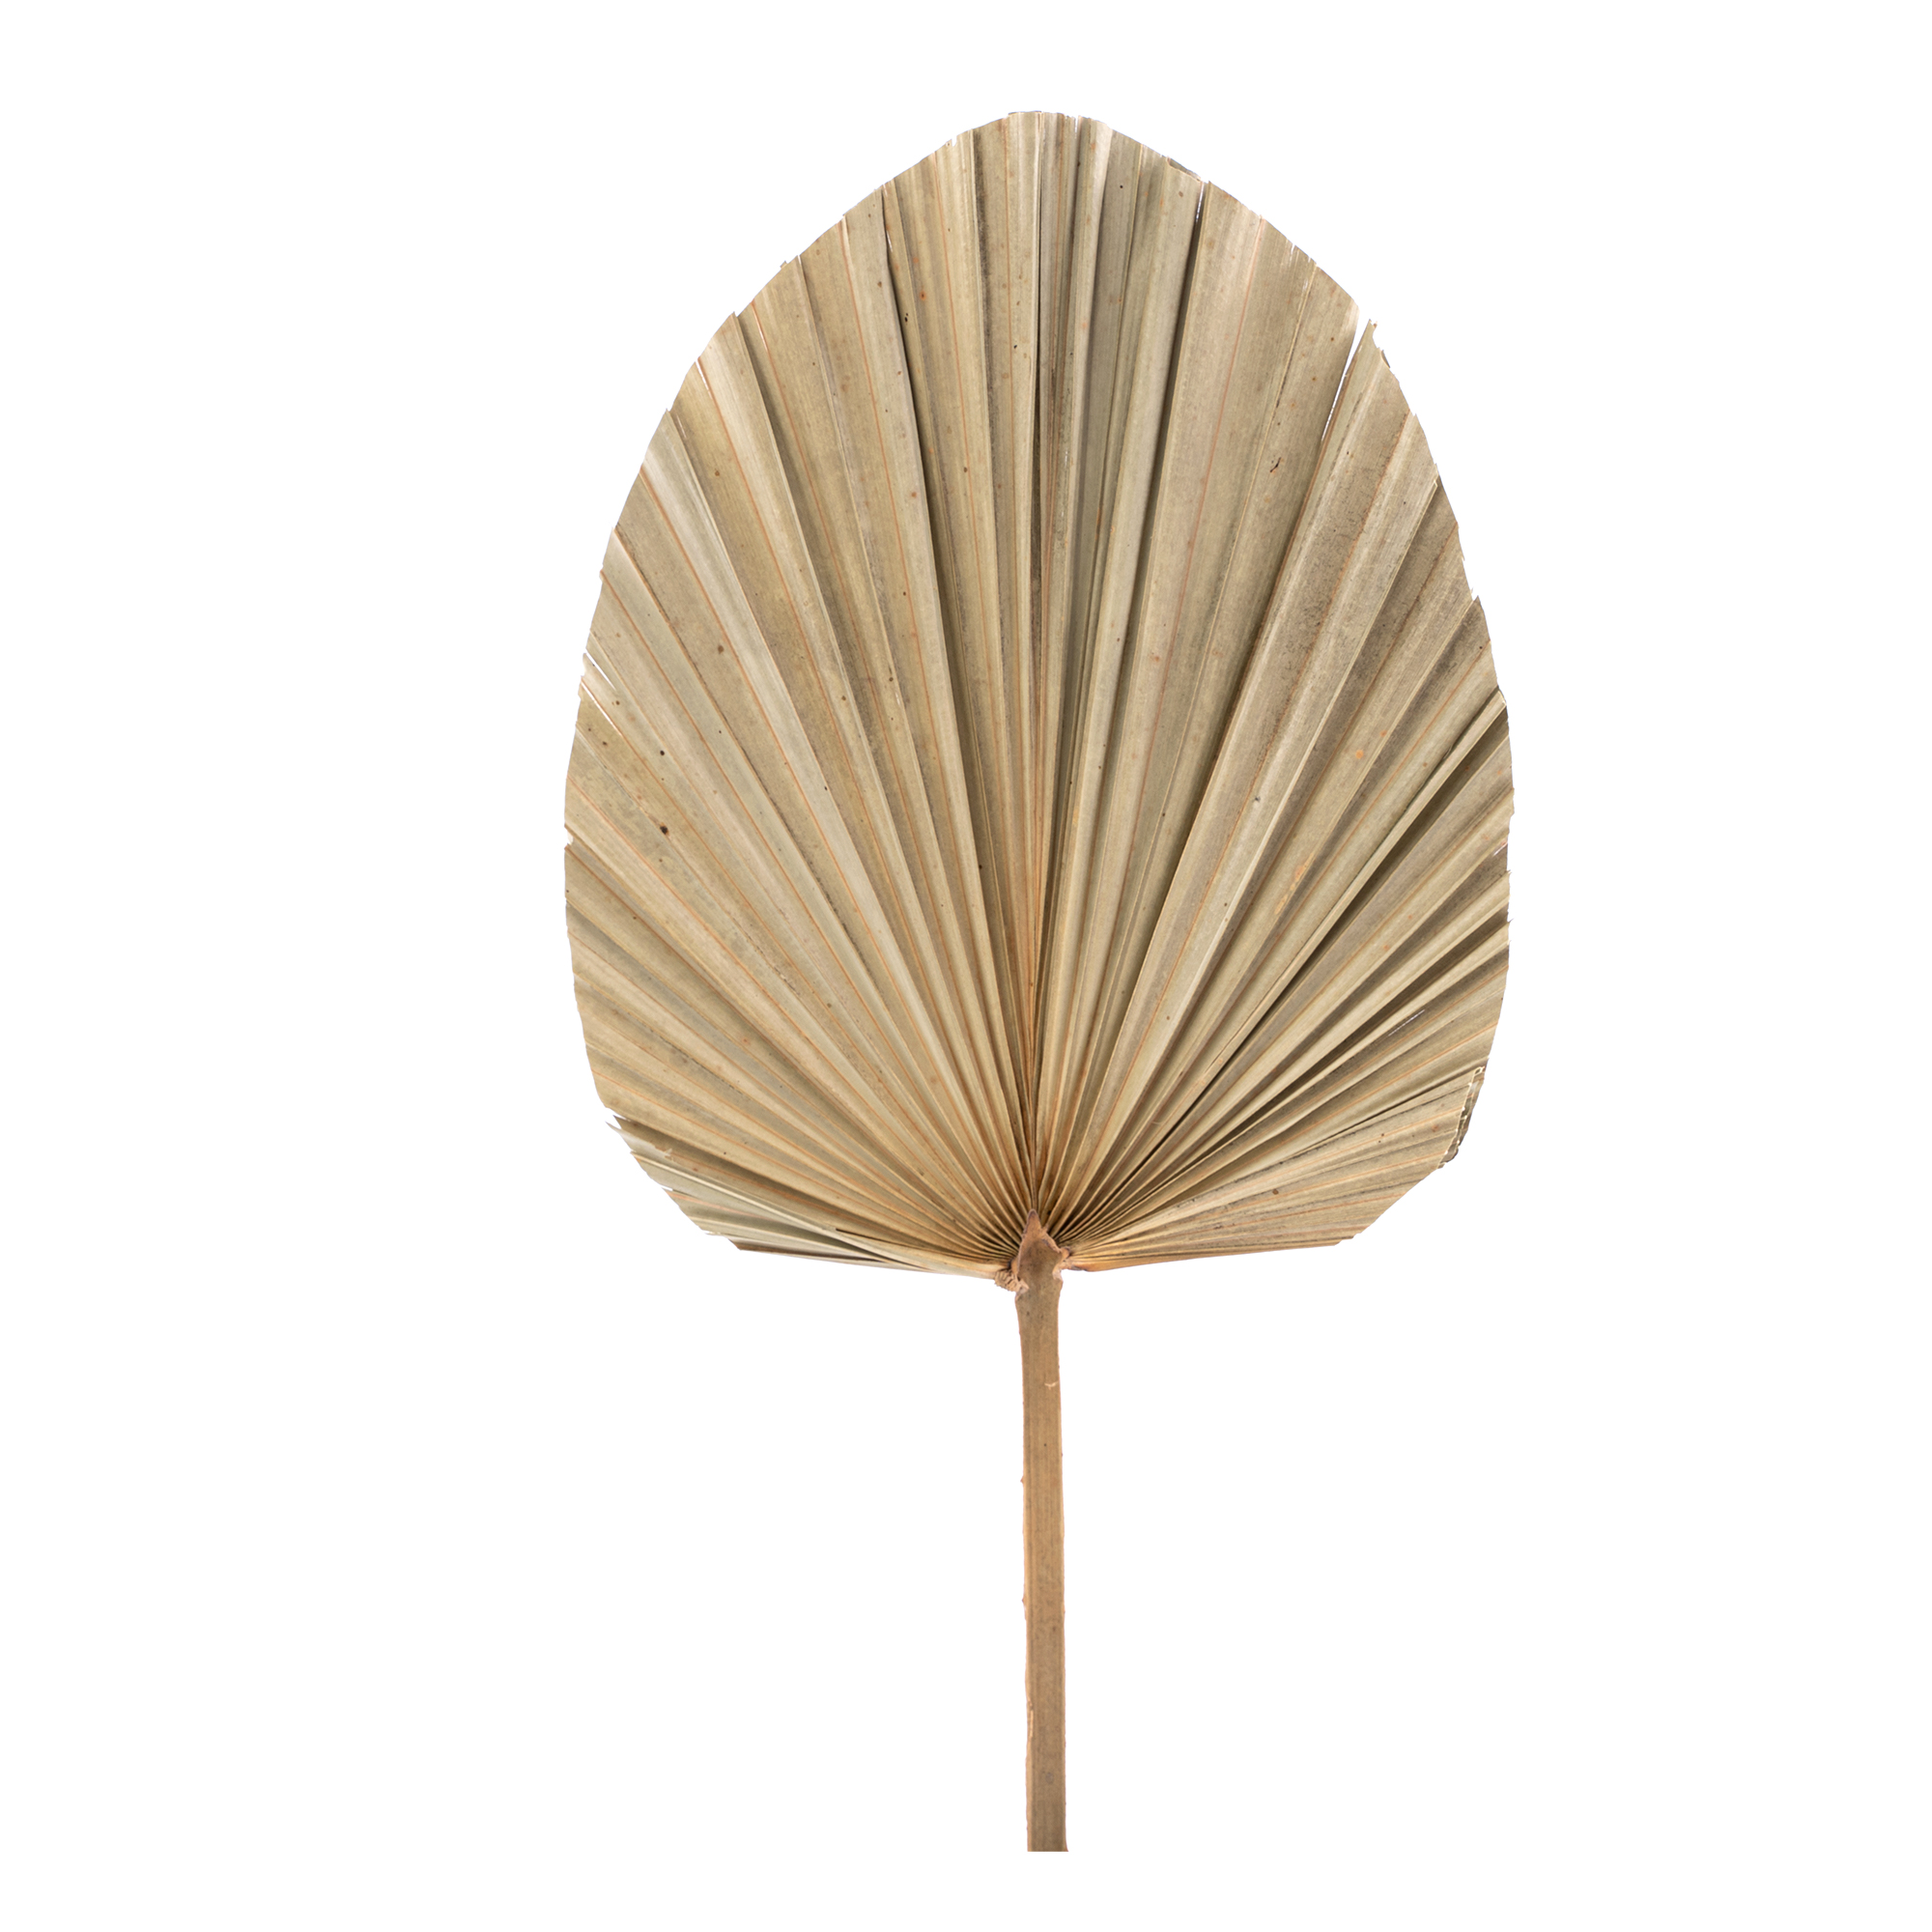 Dried Fan Palm Leaf - 19"